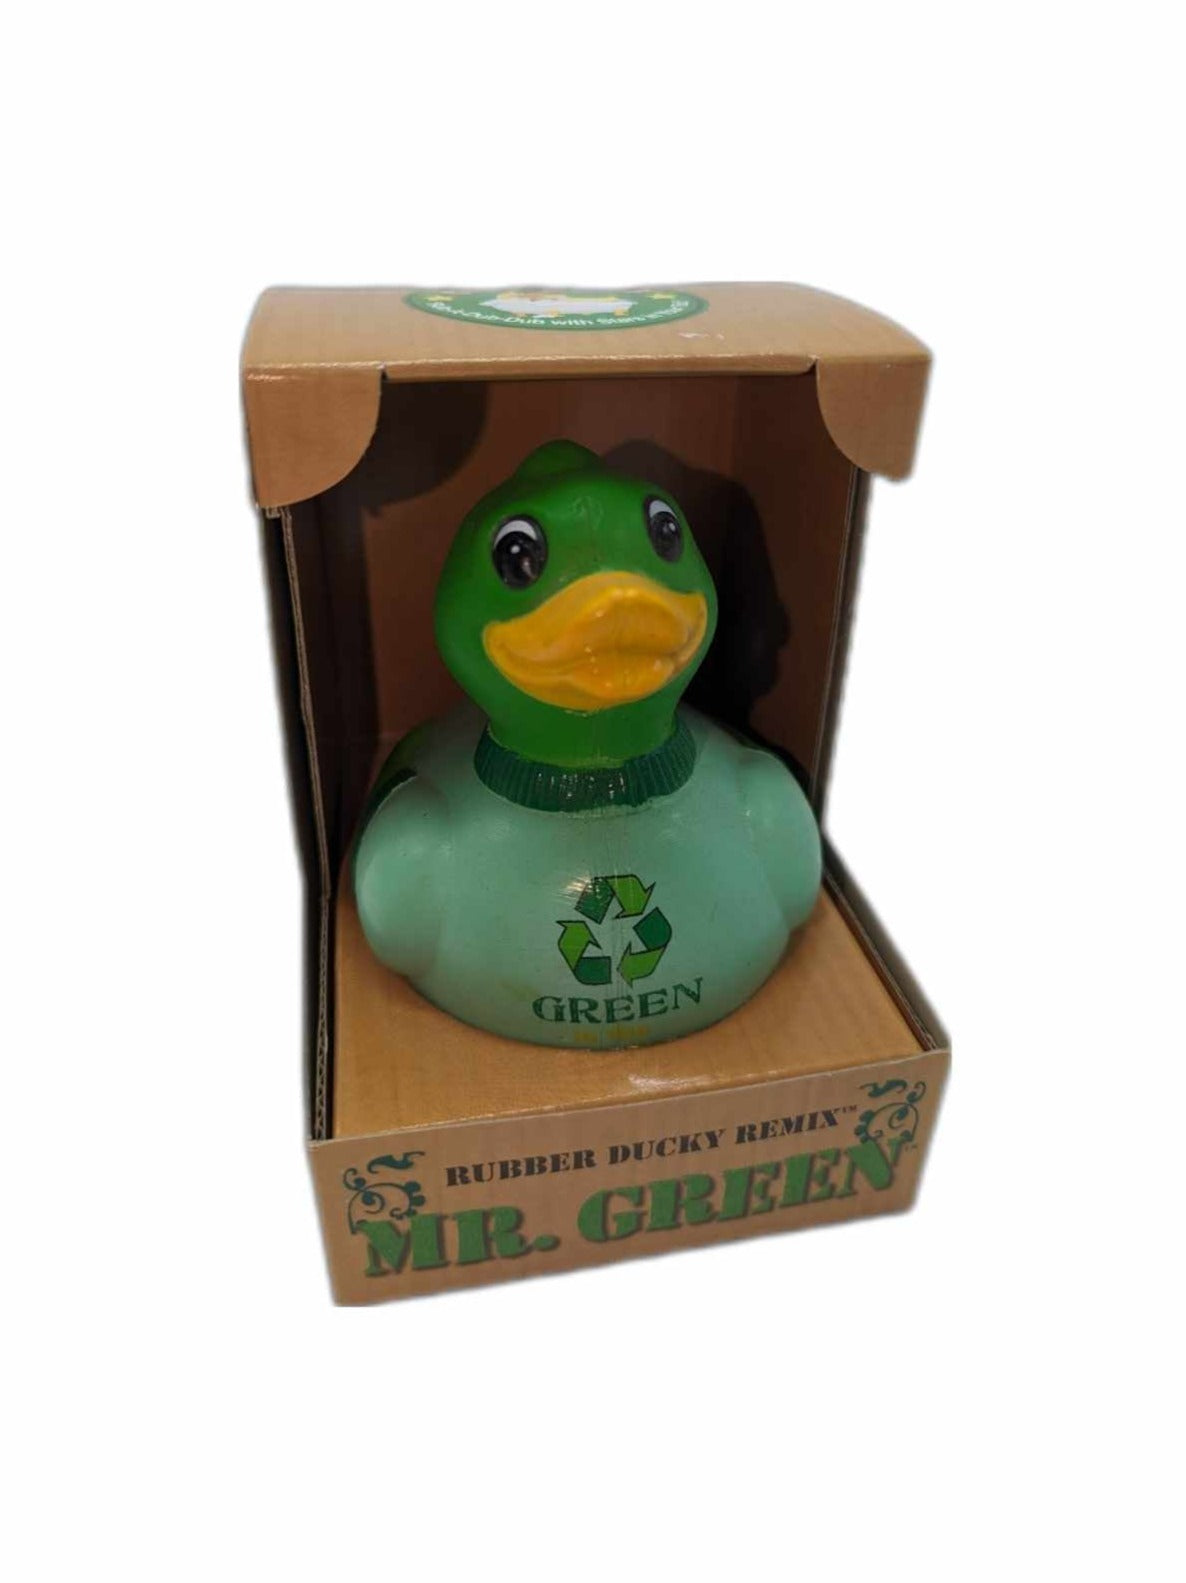 Mr. Green Celebriduck Rubber Duck